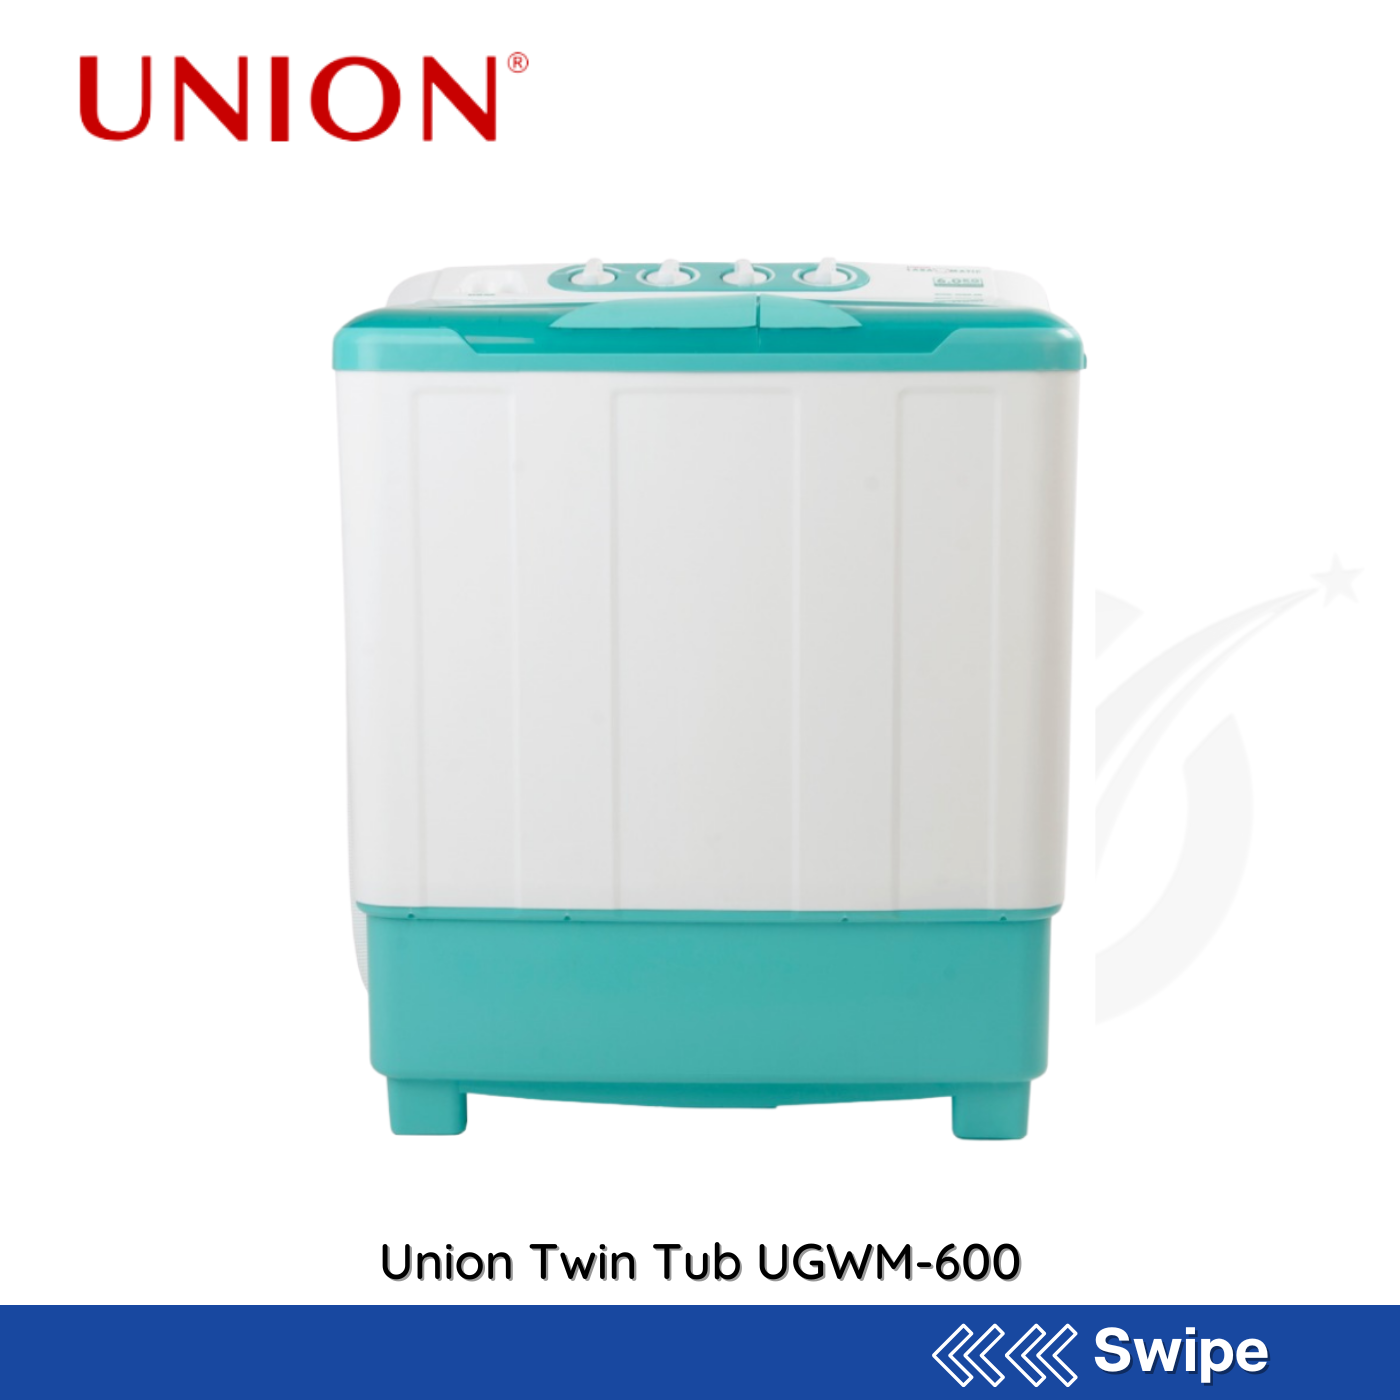 Union Twin Tub UGWM-600 - People's Choice Marketing